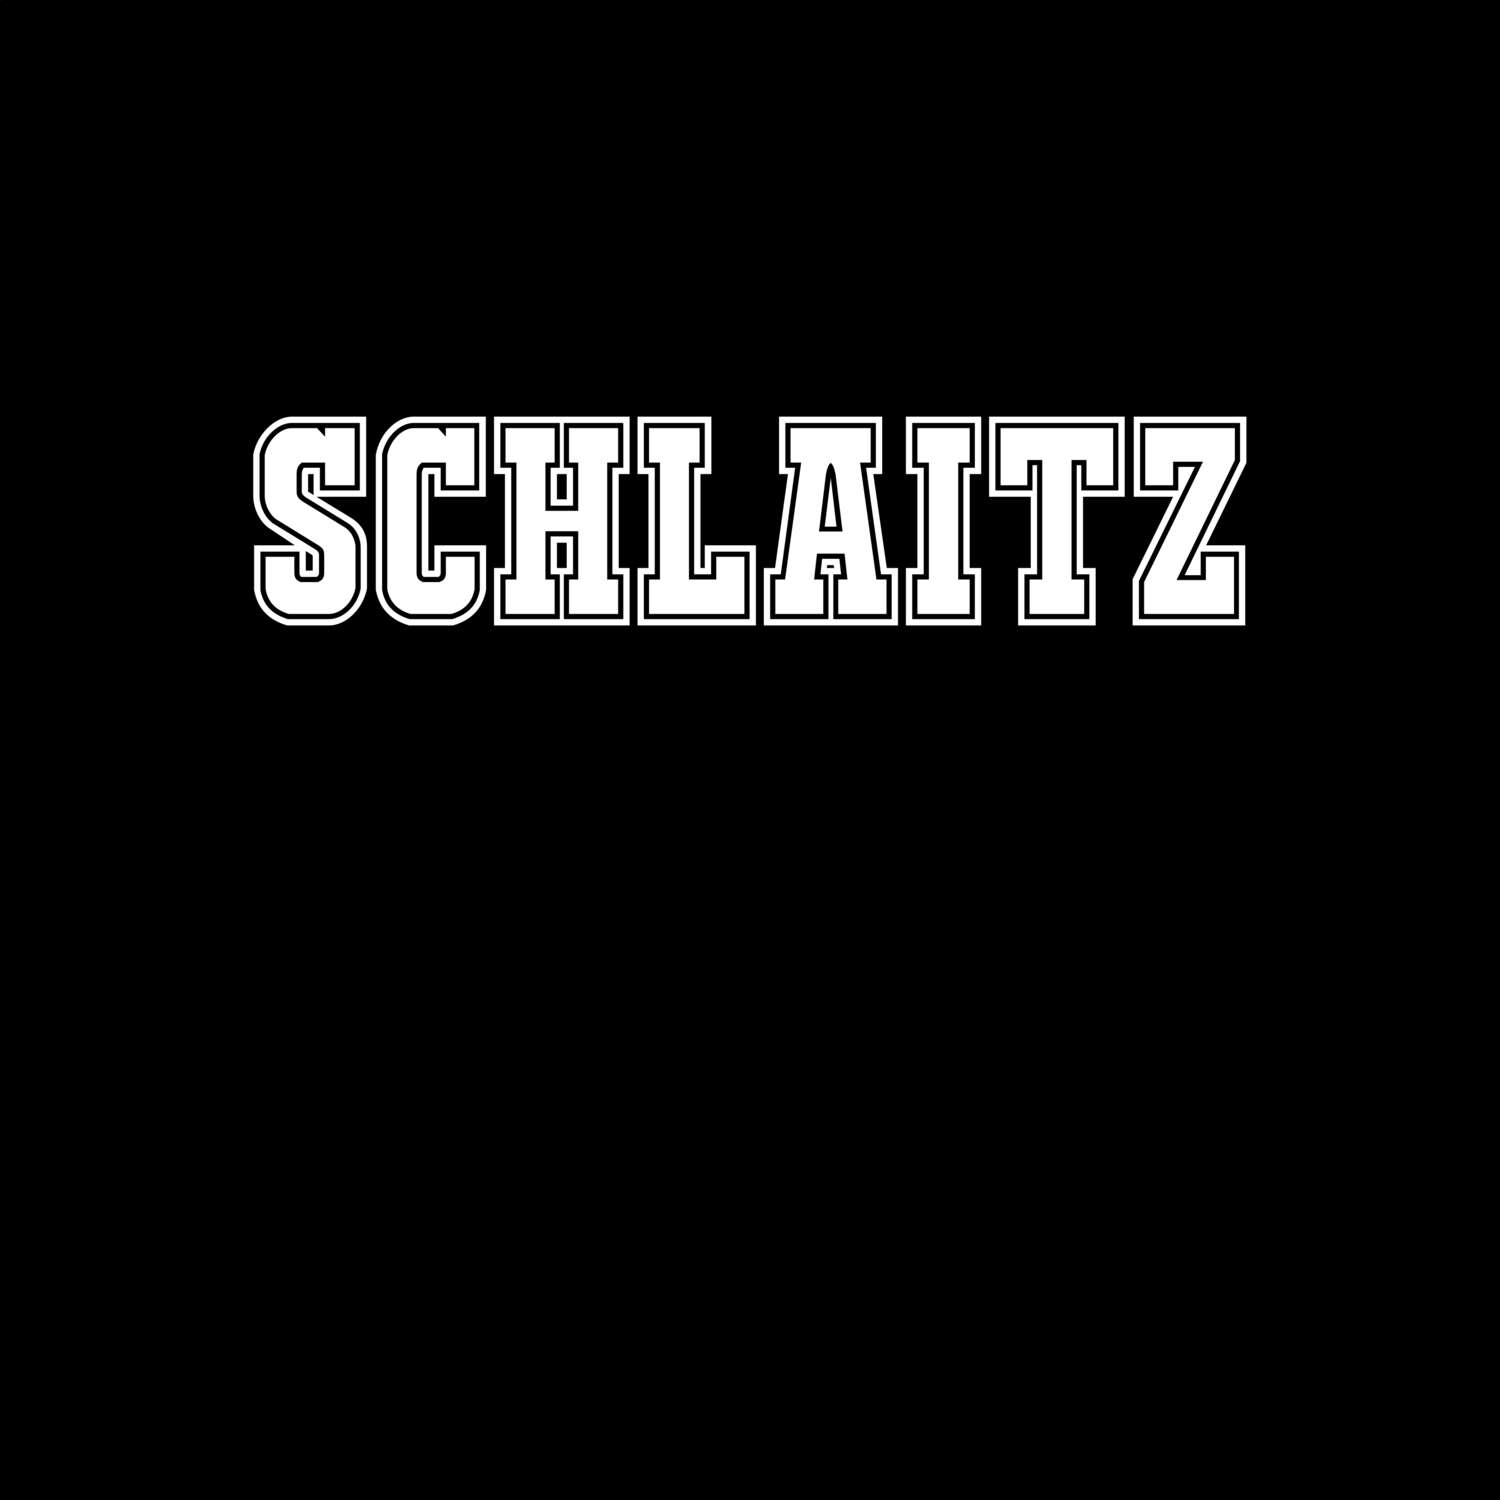 Schlaitz T-Shirt »Classic«